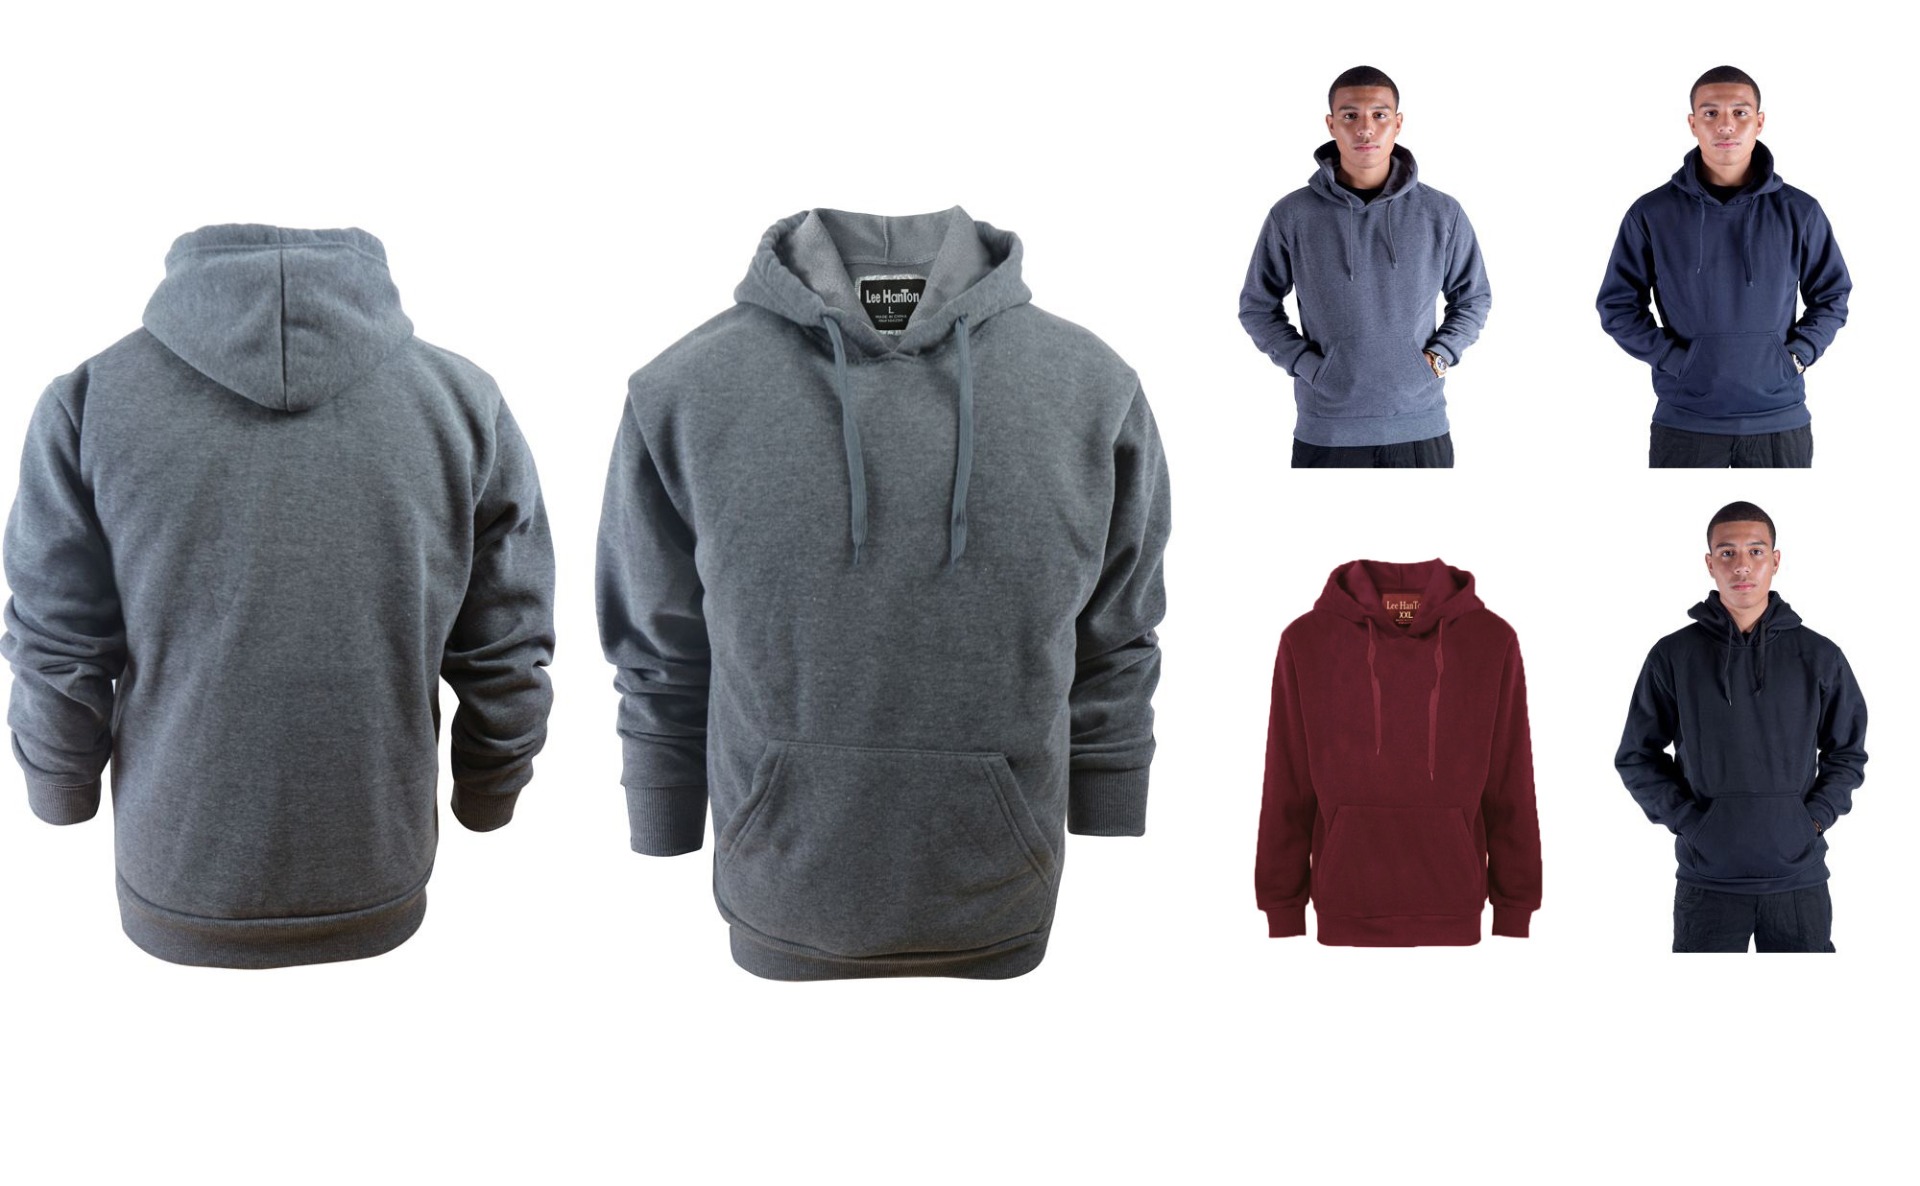 Men's Solid Color Pullover Fleece HOODIES - Choose Your Color(s)